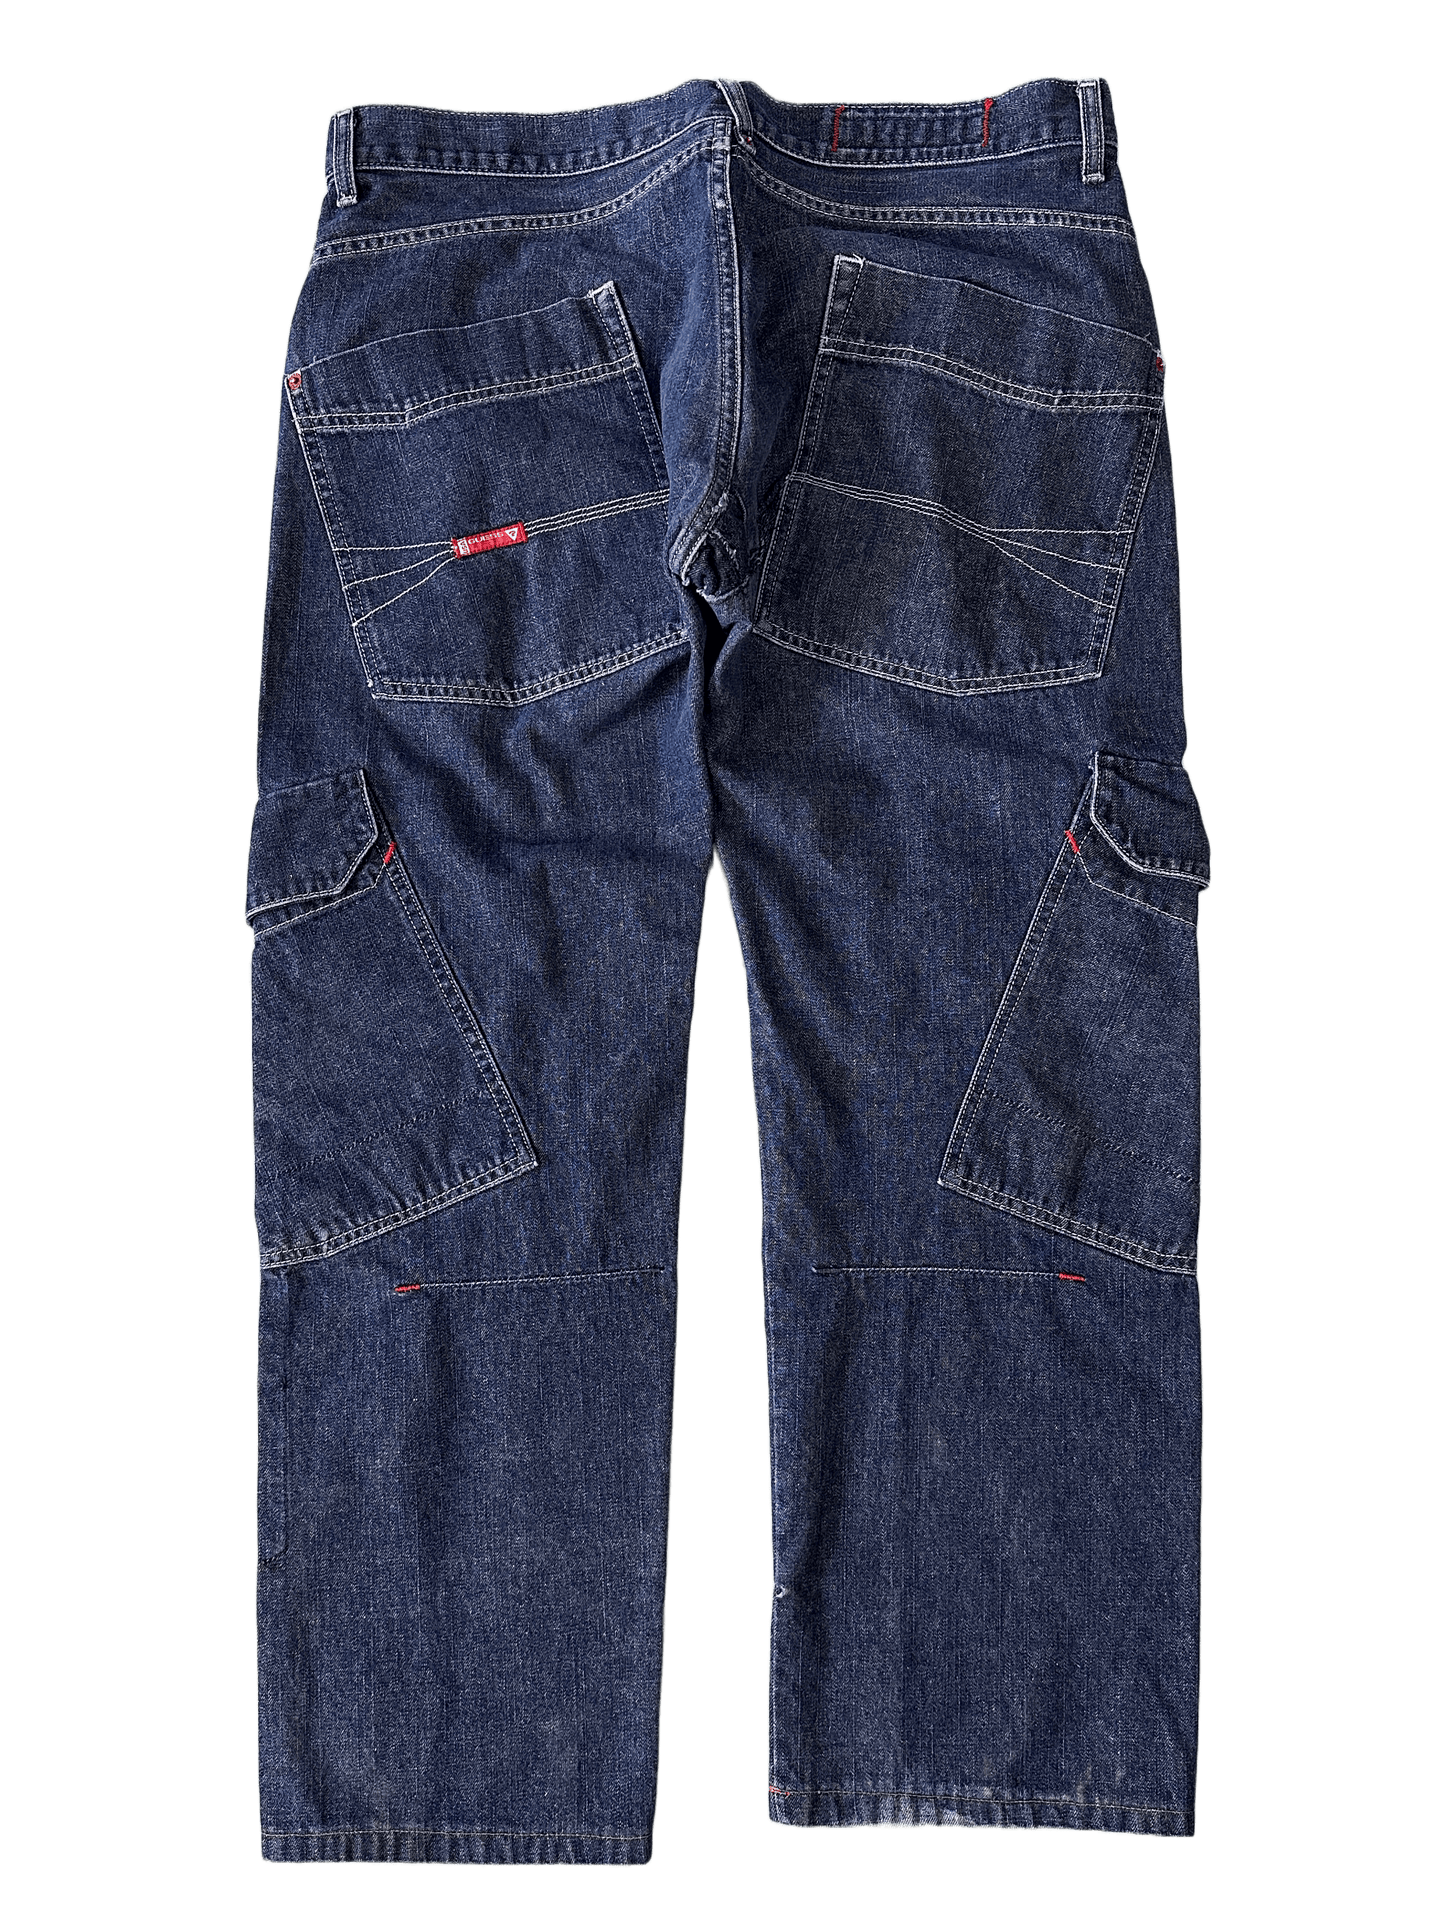 Guess Multipocket Vintage Jeans - 38 x 34